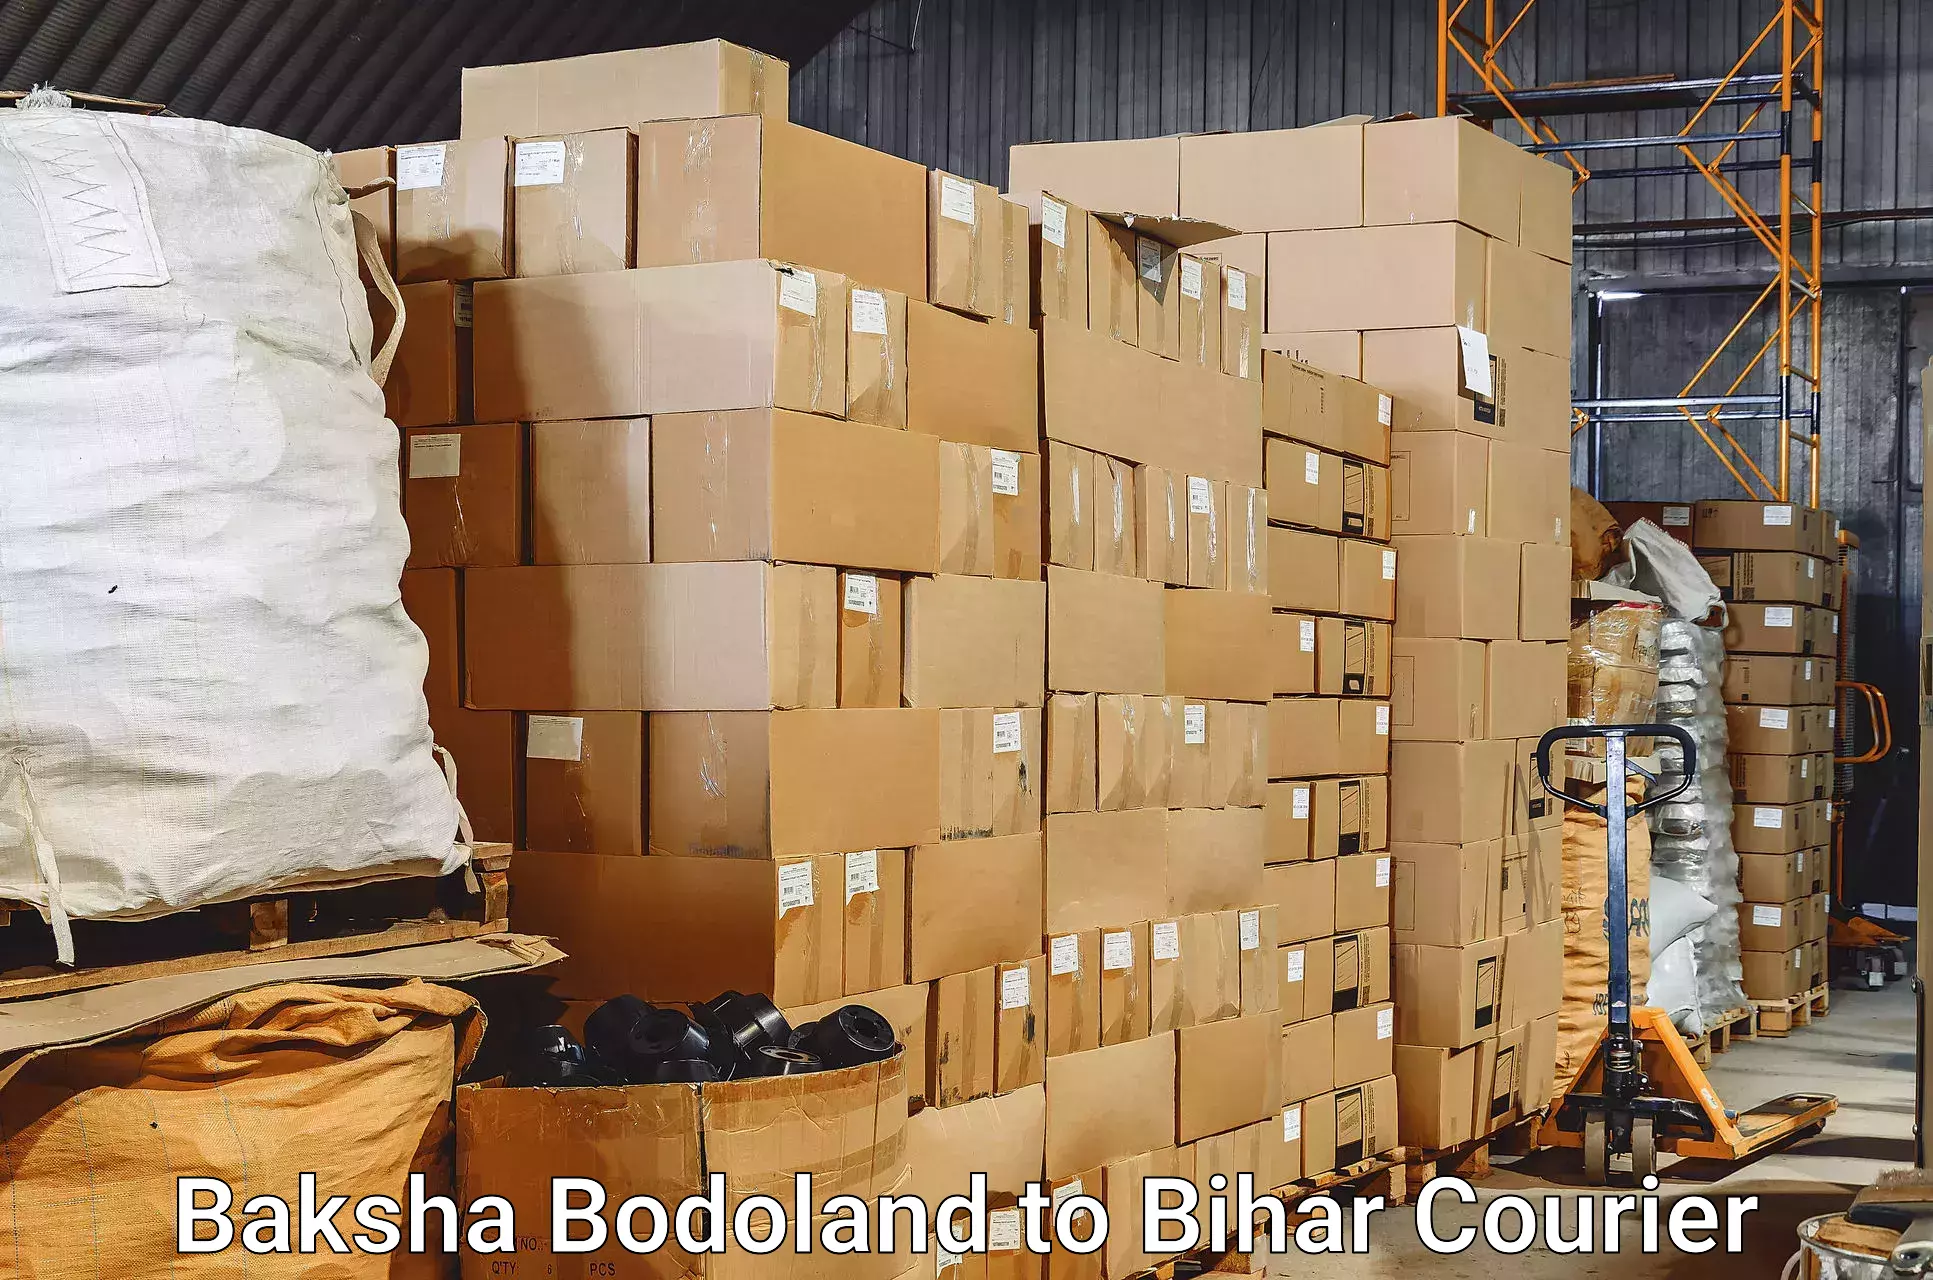 Urgent luggage shipment in Baksha Bodoland to Bihar